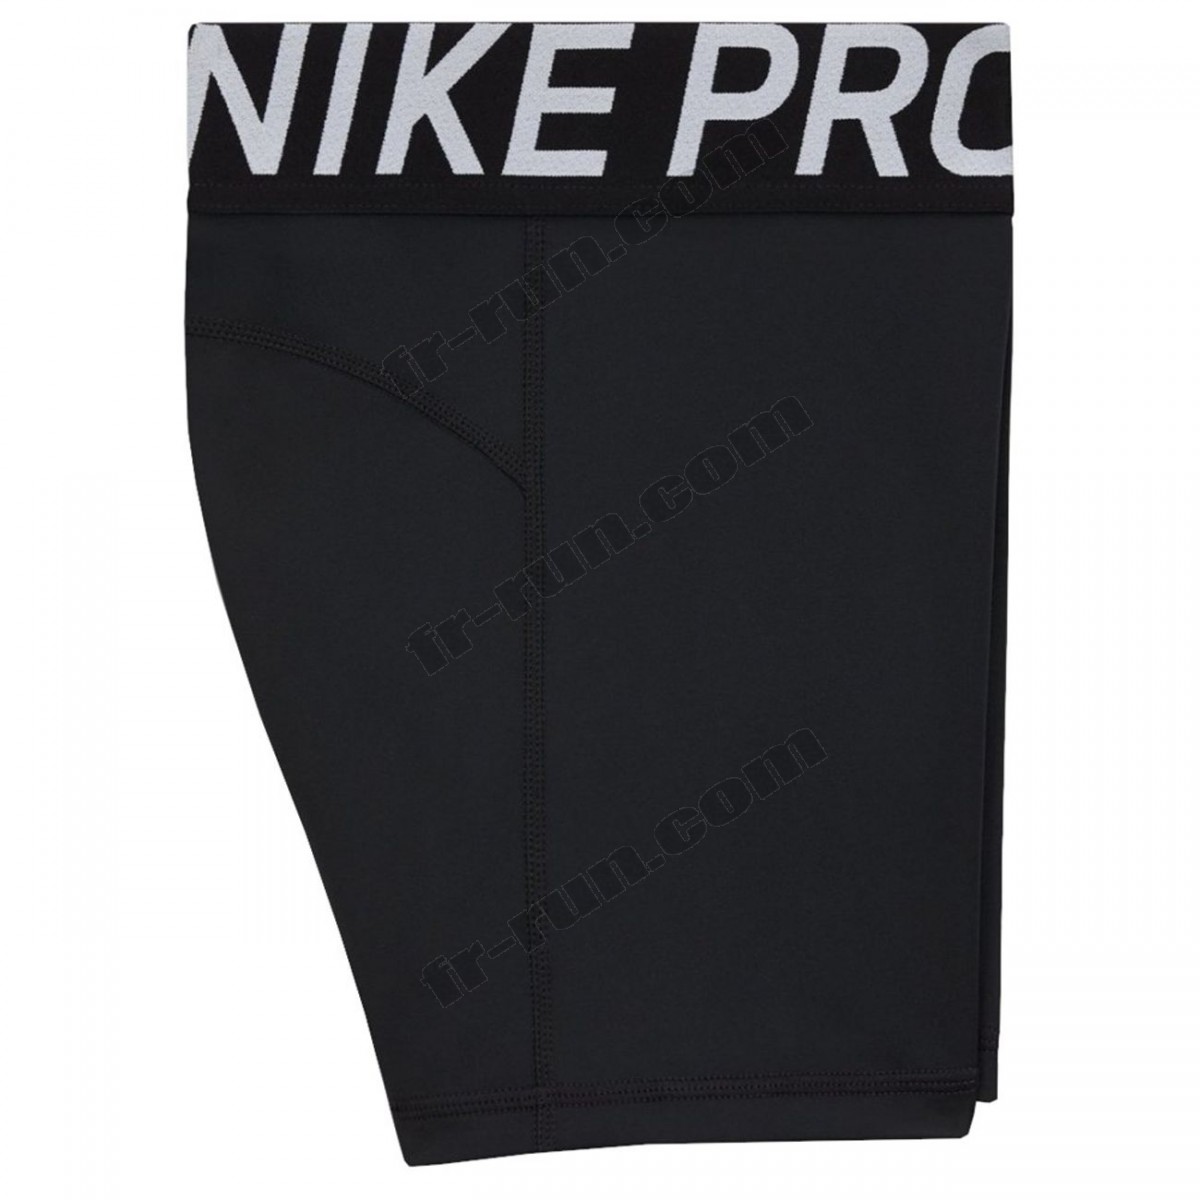 Nike/Training homme NIKE Nike Pro 3IN Drifit ◇◇◇ Pas Cher Du Tout - -6